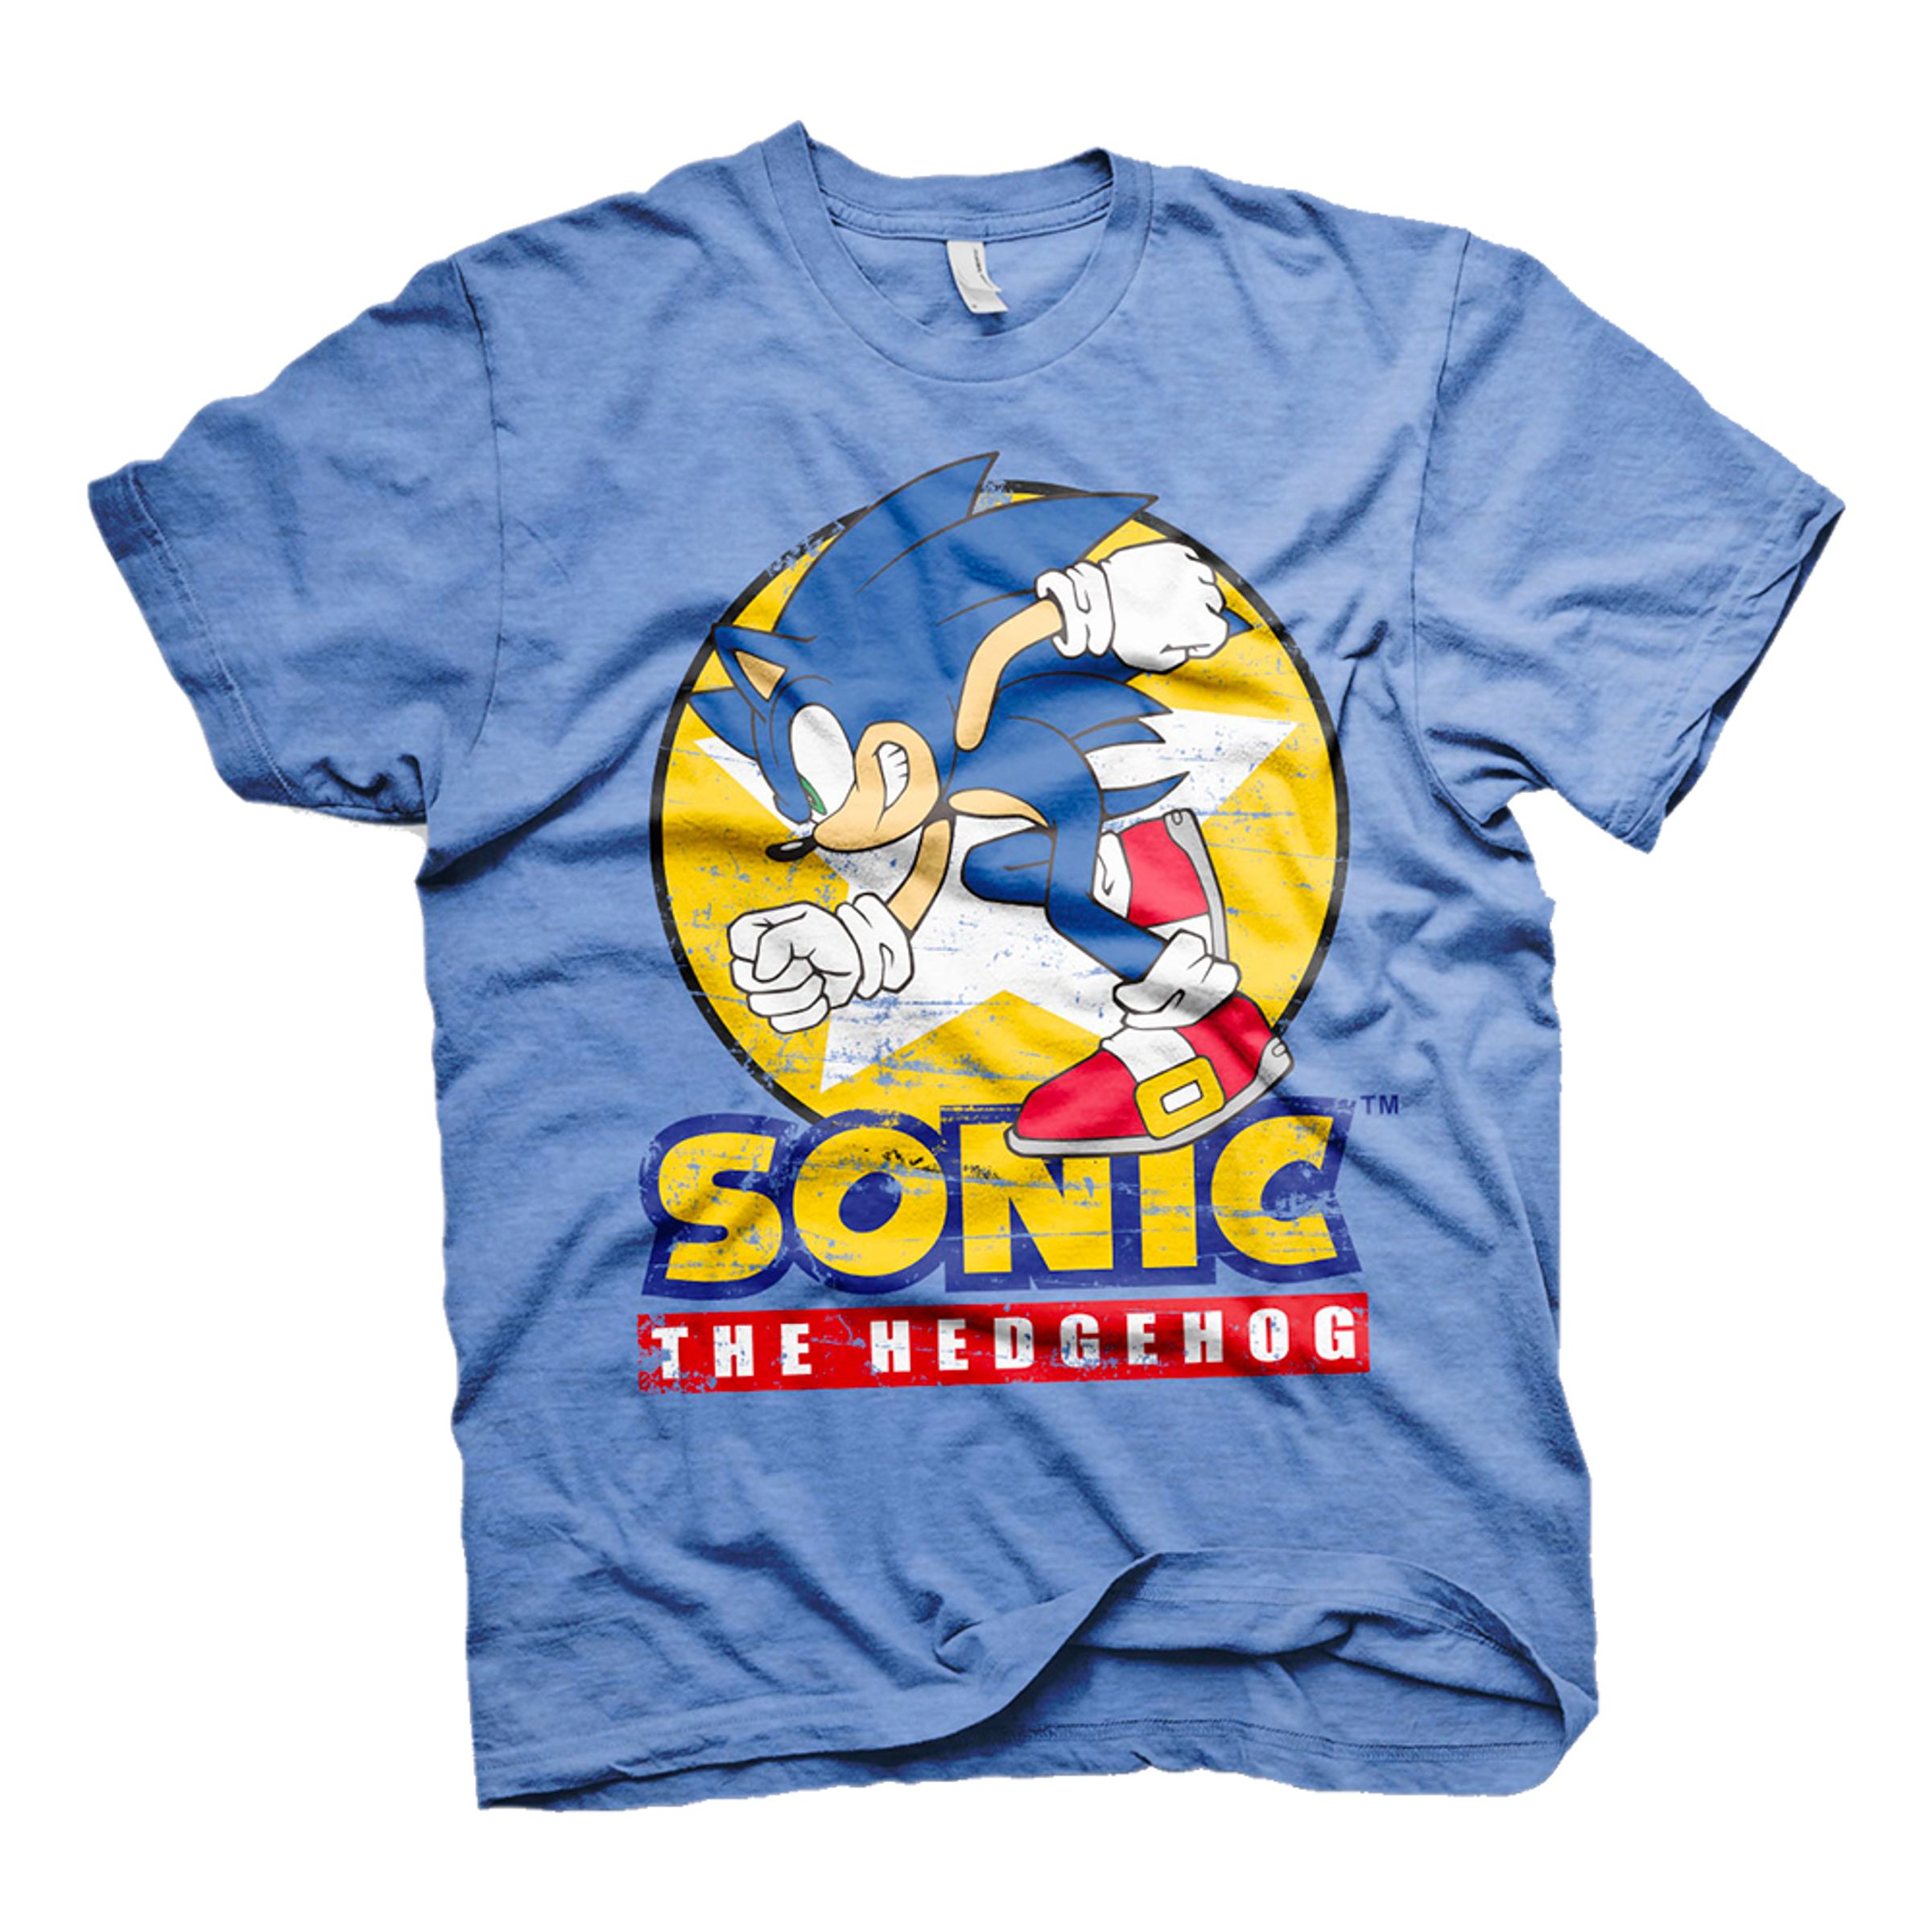 Sonic the Hedgehog T-shirt - X-Large